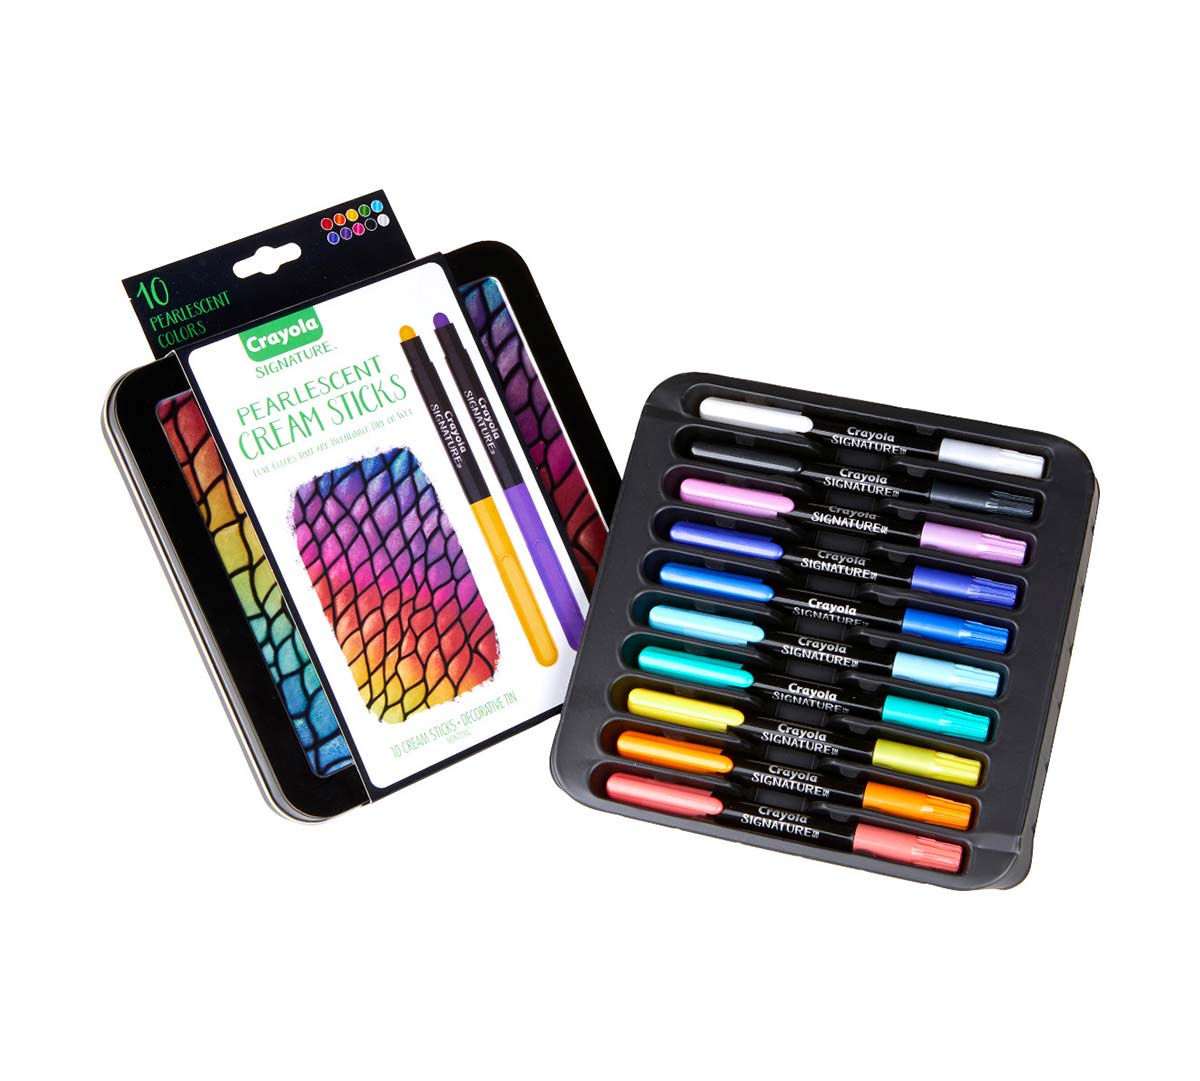 https://shop.crayola.com/on/demandware.static/-/Sites-crayola-storefront/default/dw2b04aa97/images/52-9507-0-300_Pearlescent-Cream-Sticks_H1-SS.jpg